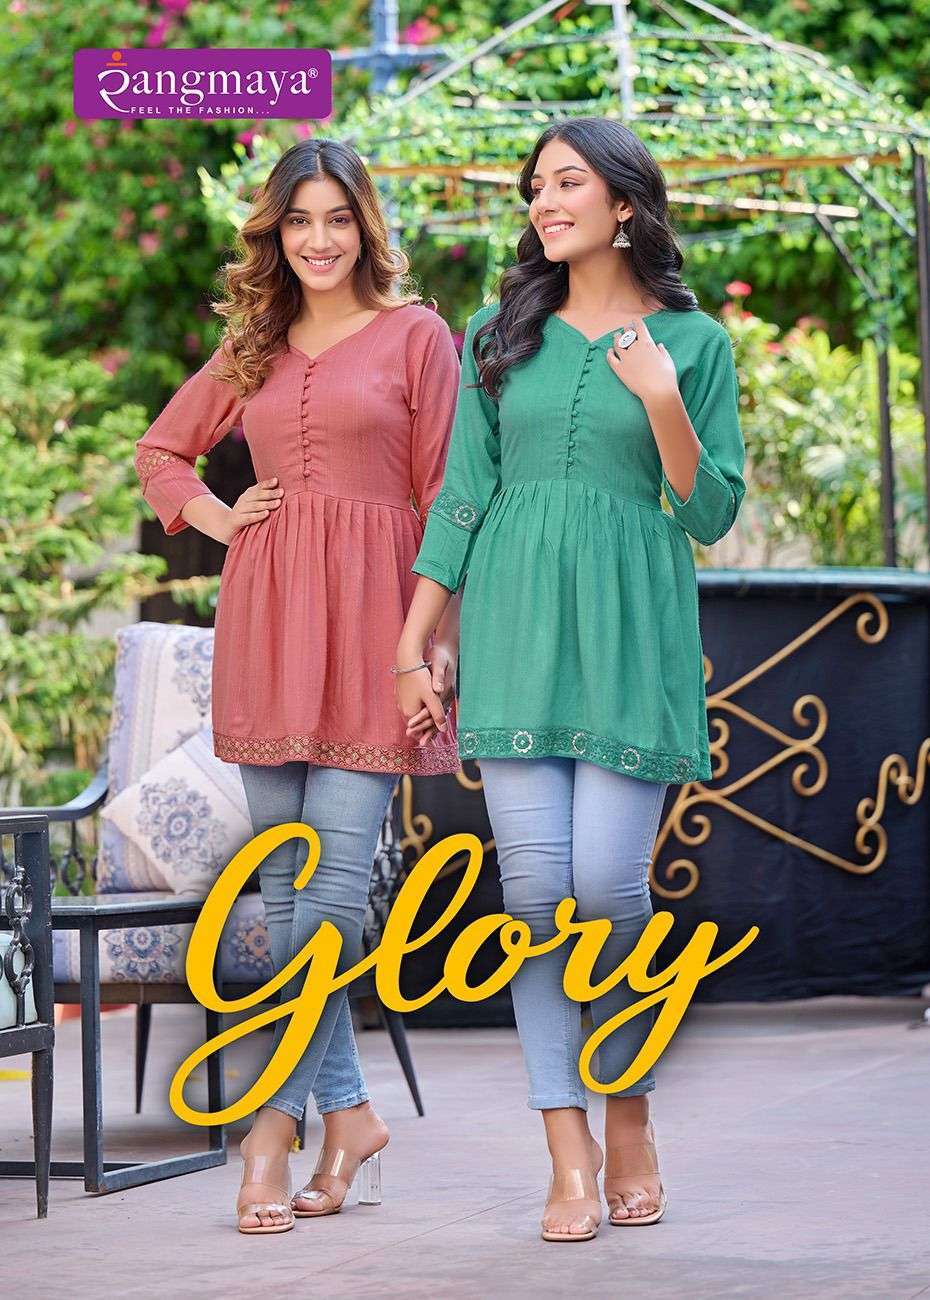 rangmaya glory series 101-105 Bombay imported fabric kurti